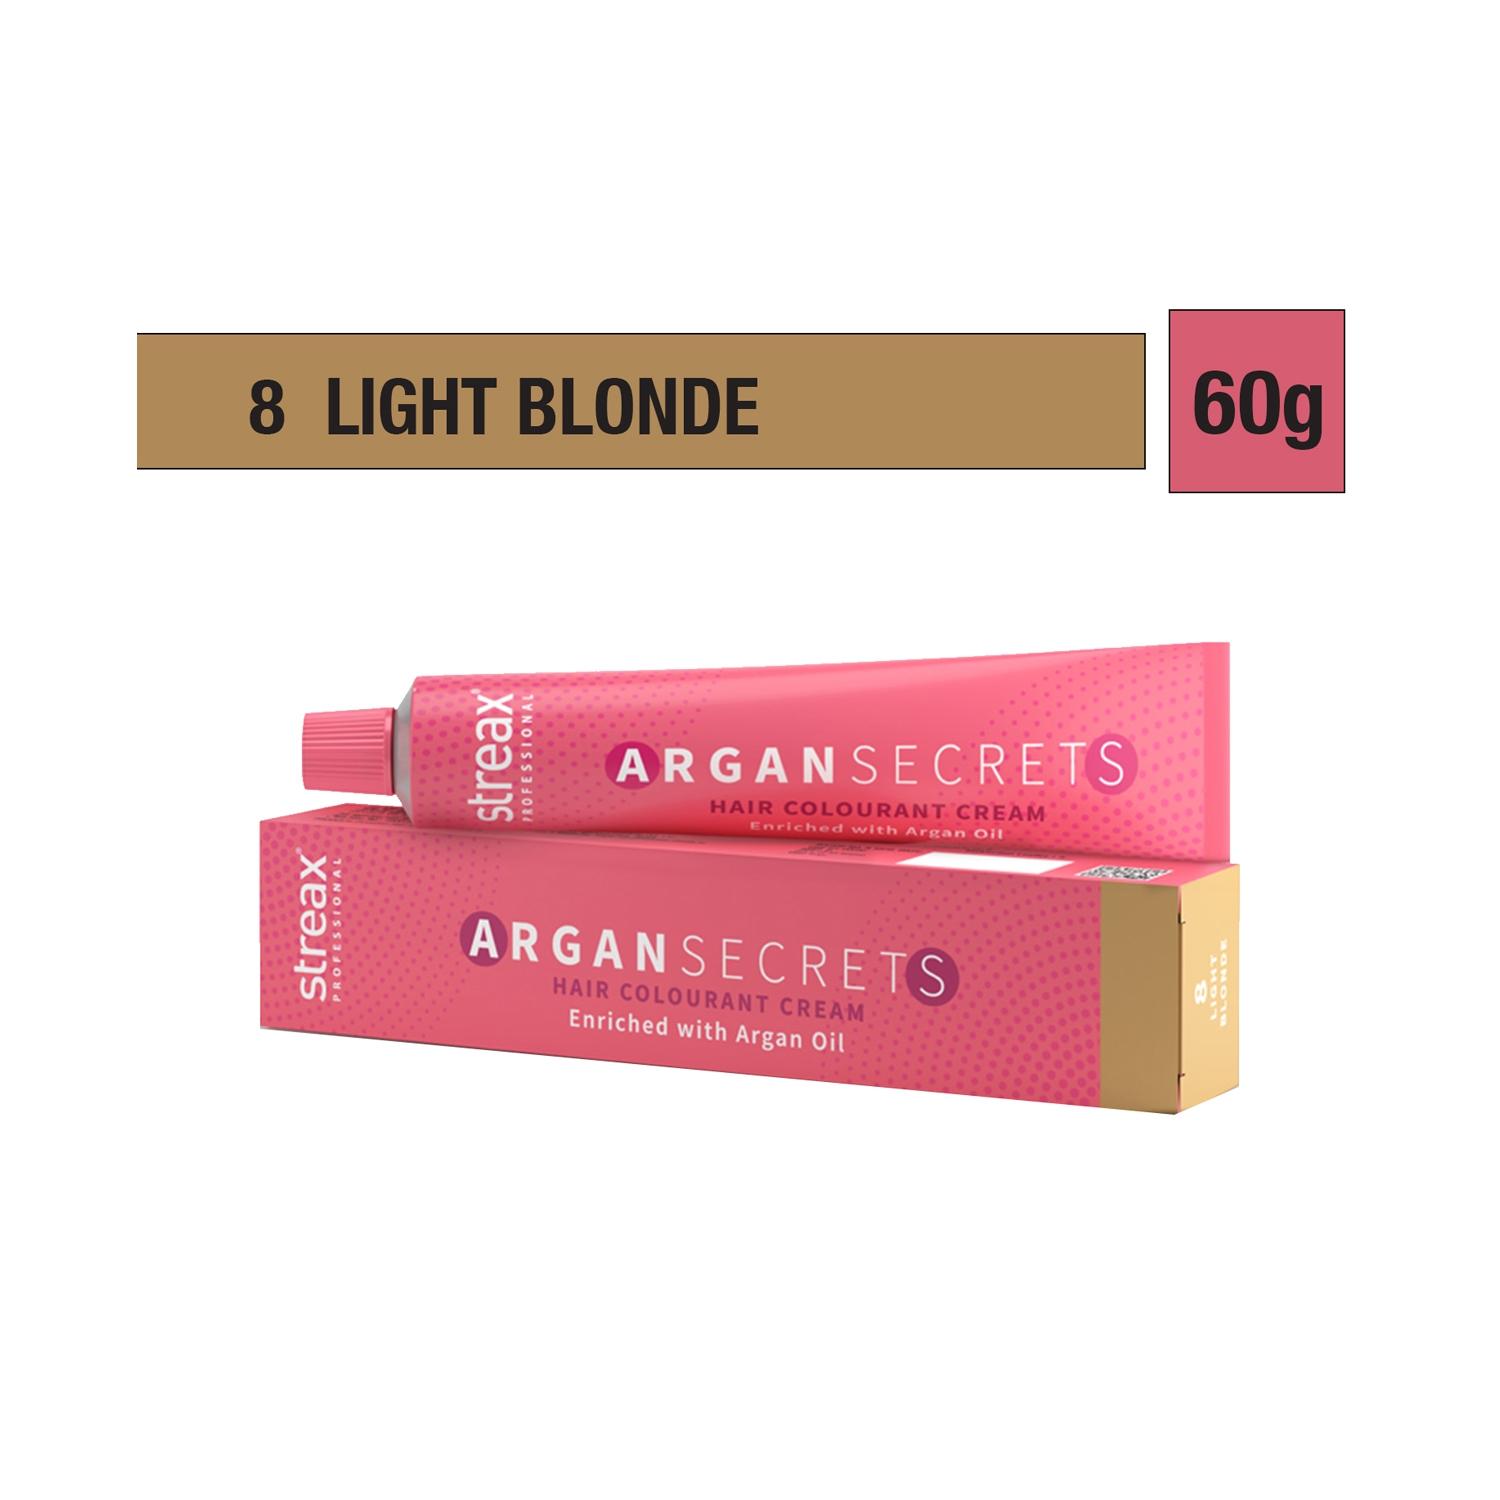 streax professional argan secrets hair colorant cream - 8 light blonde (60g)